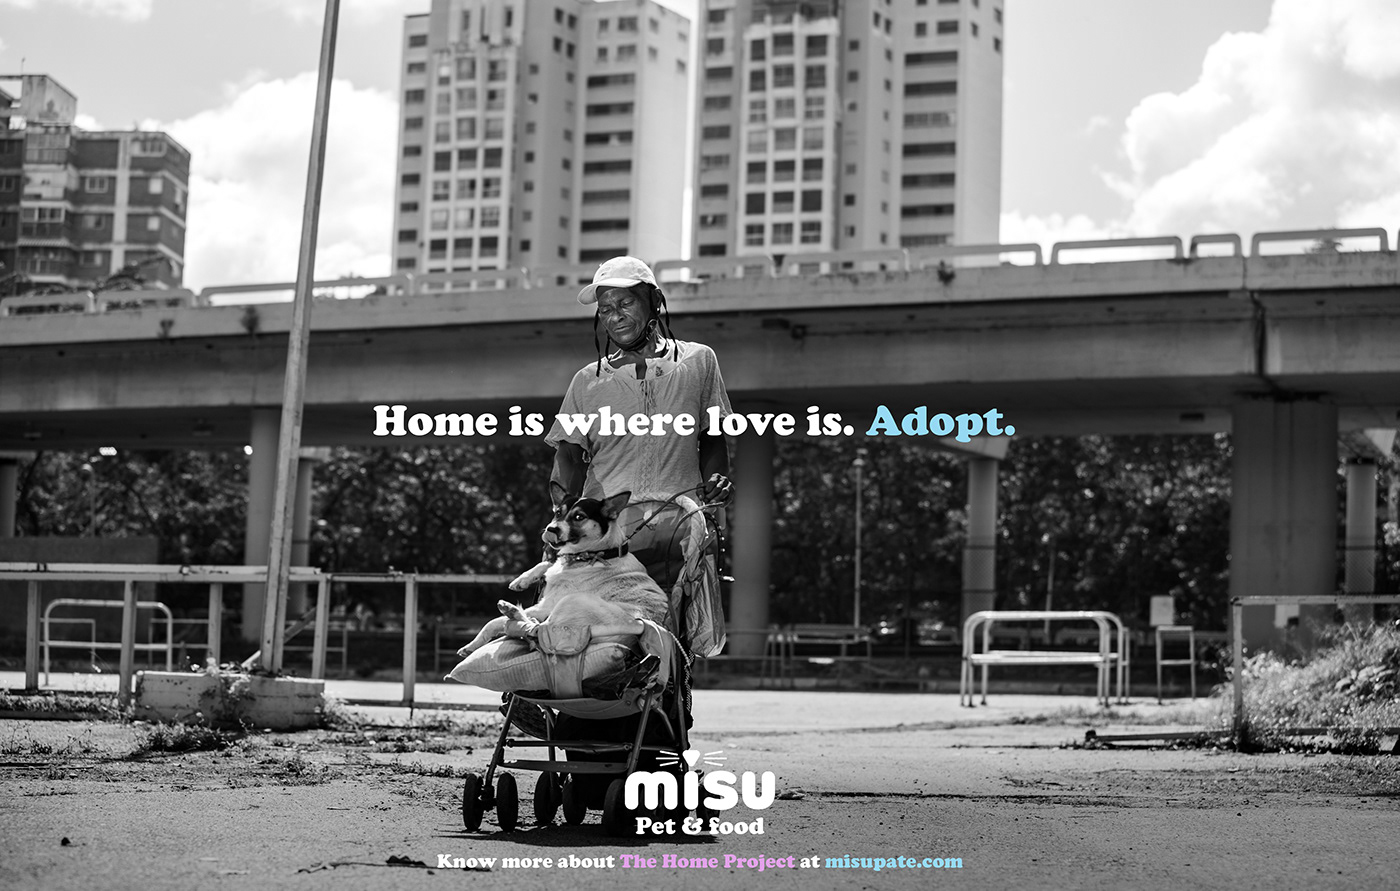 dog homeless misu Pet &Food publicidad the home project venezuela Pet adoption Advertising 